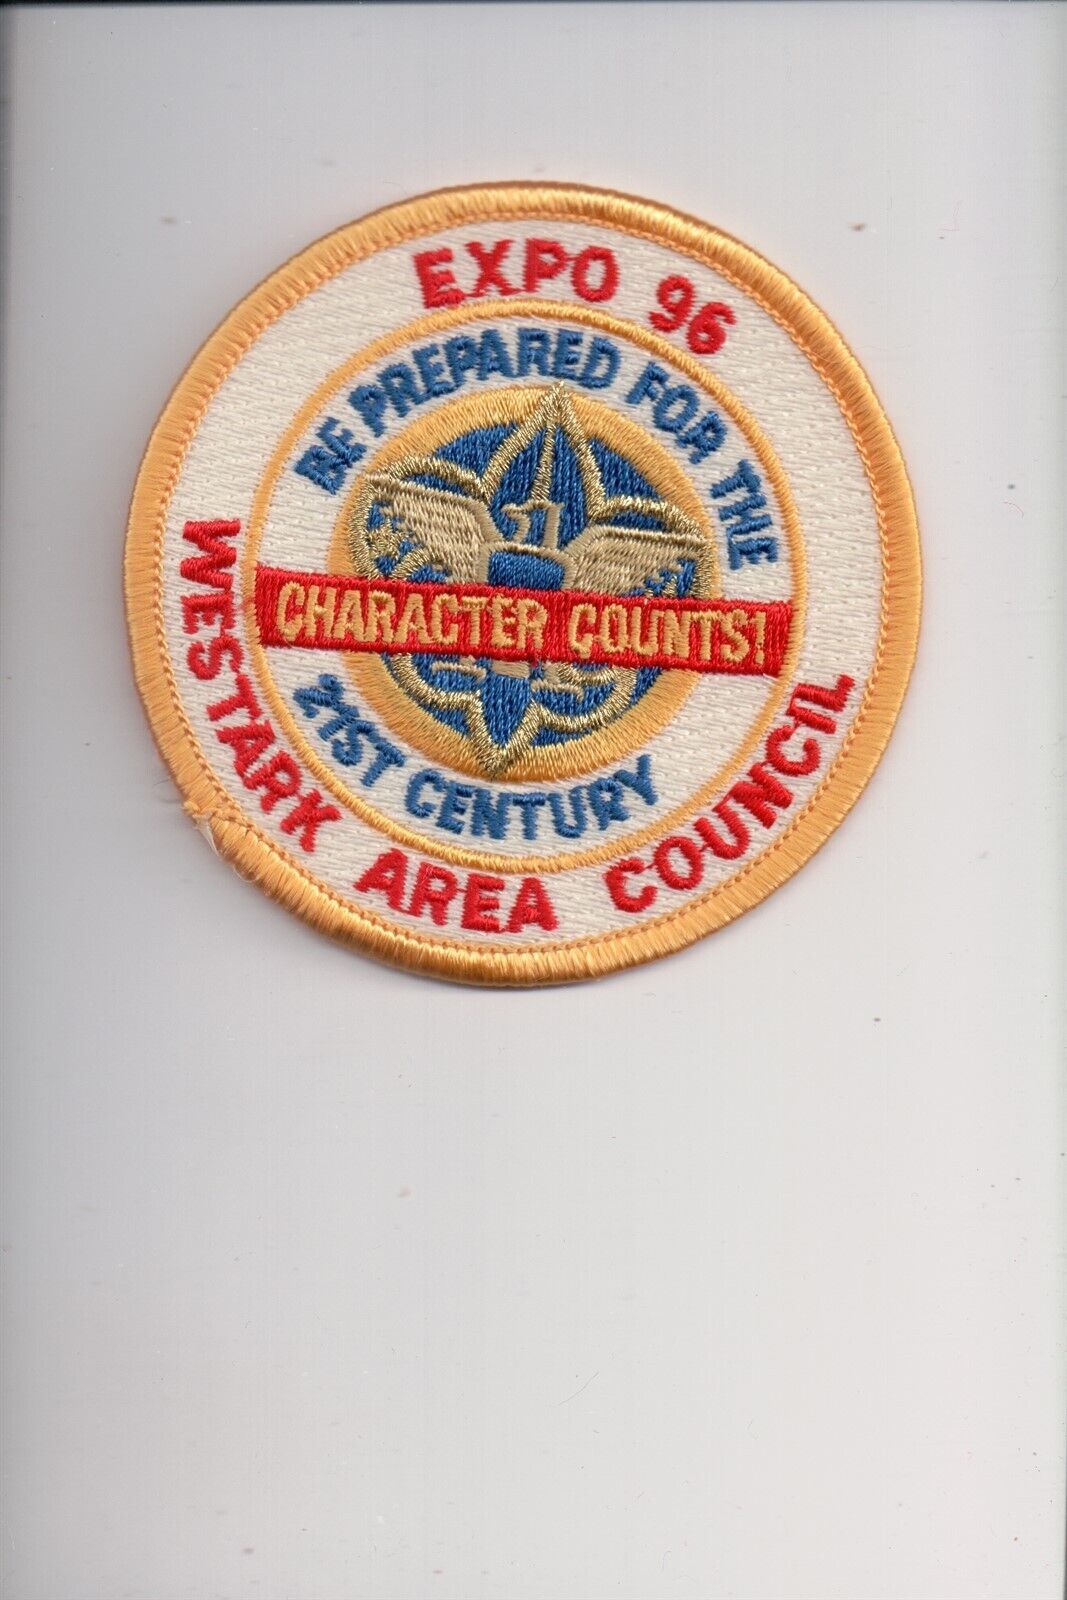 1996 Westark Area Council Expo patch